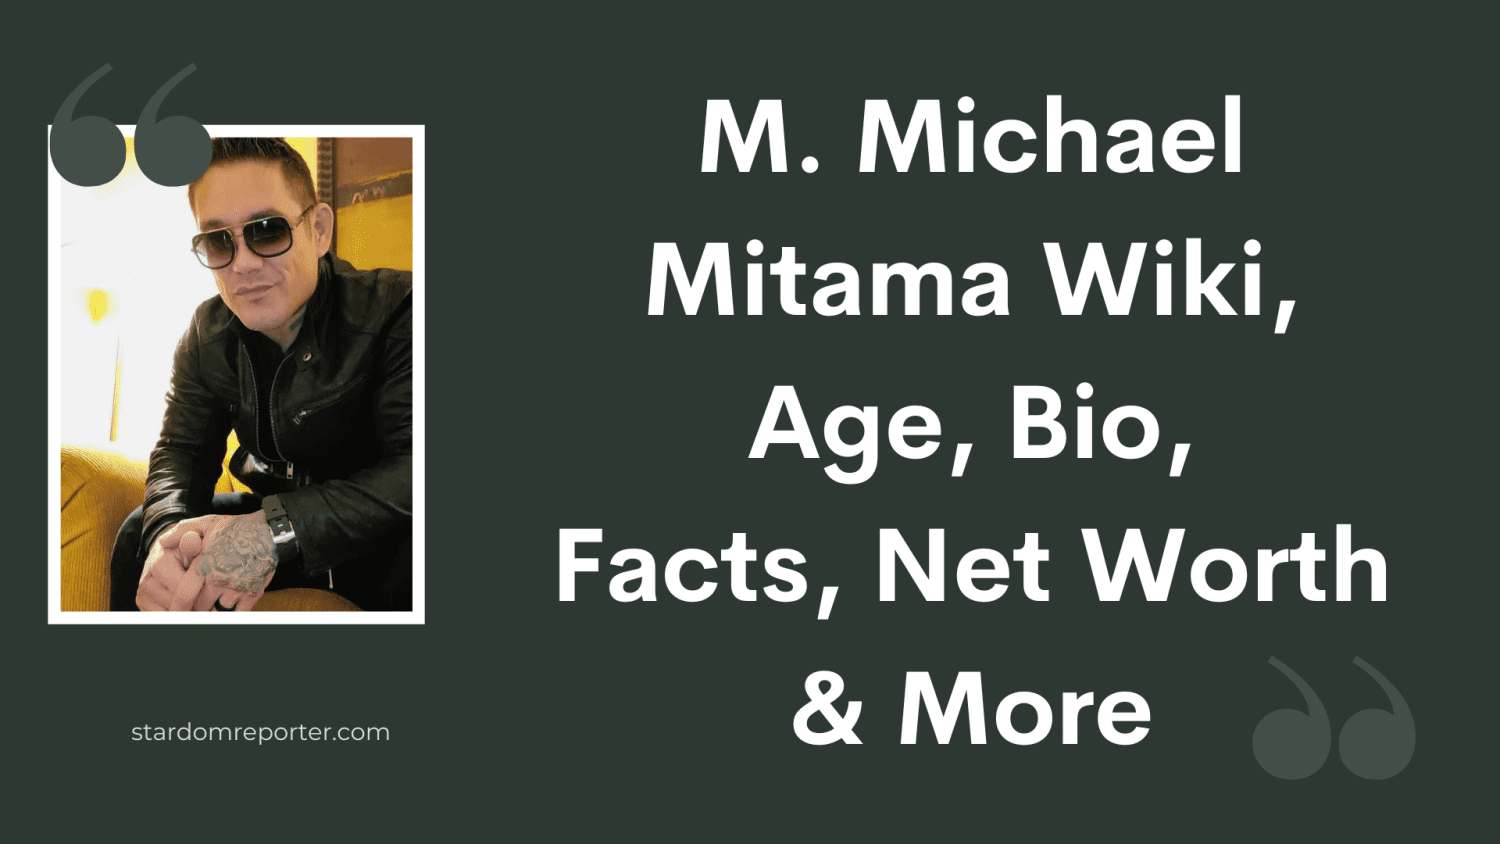 M. Michael Mitama Wiki, Age, Bio, Facts, Net Worth & More - 1